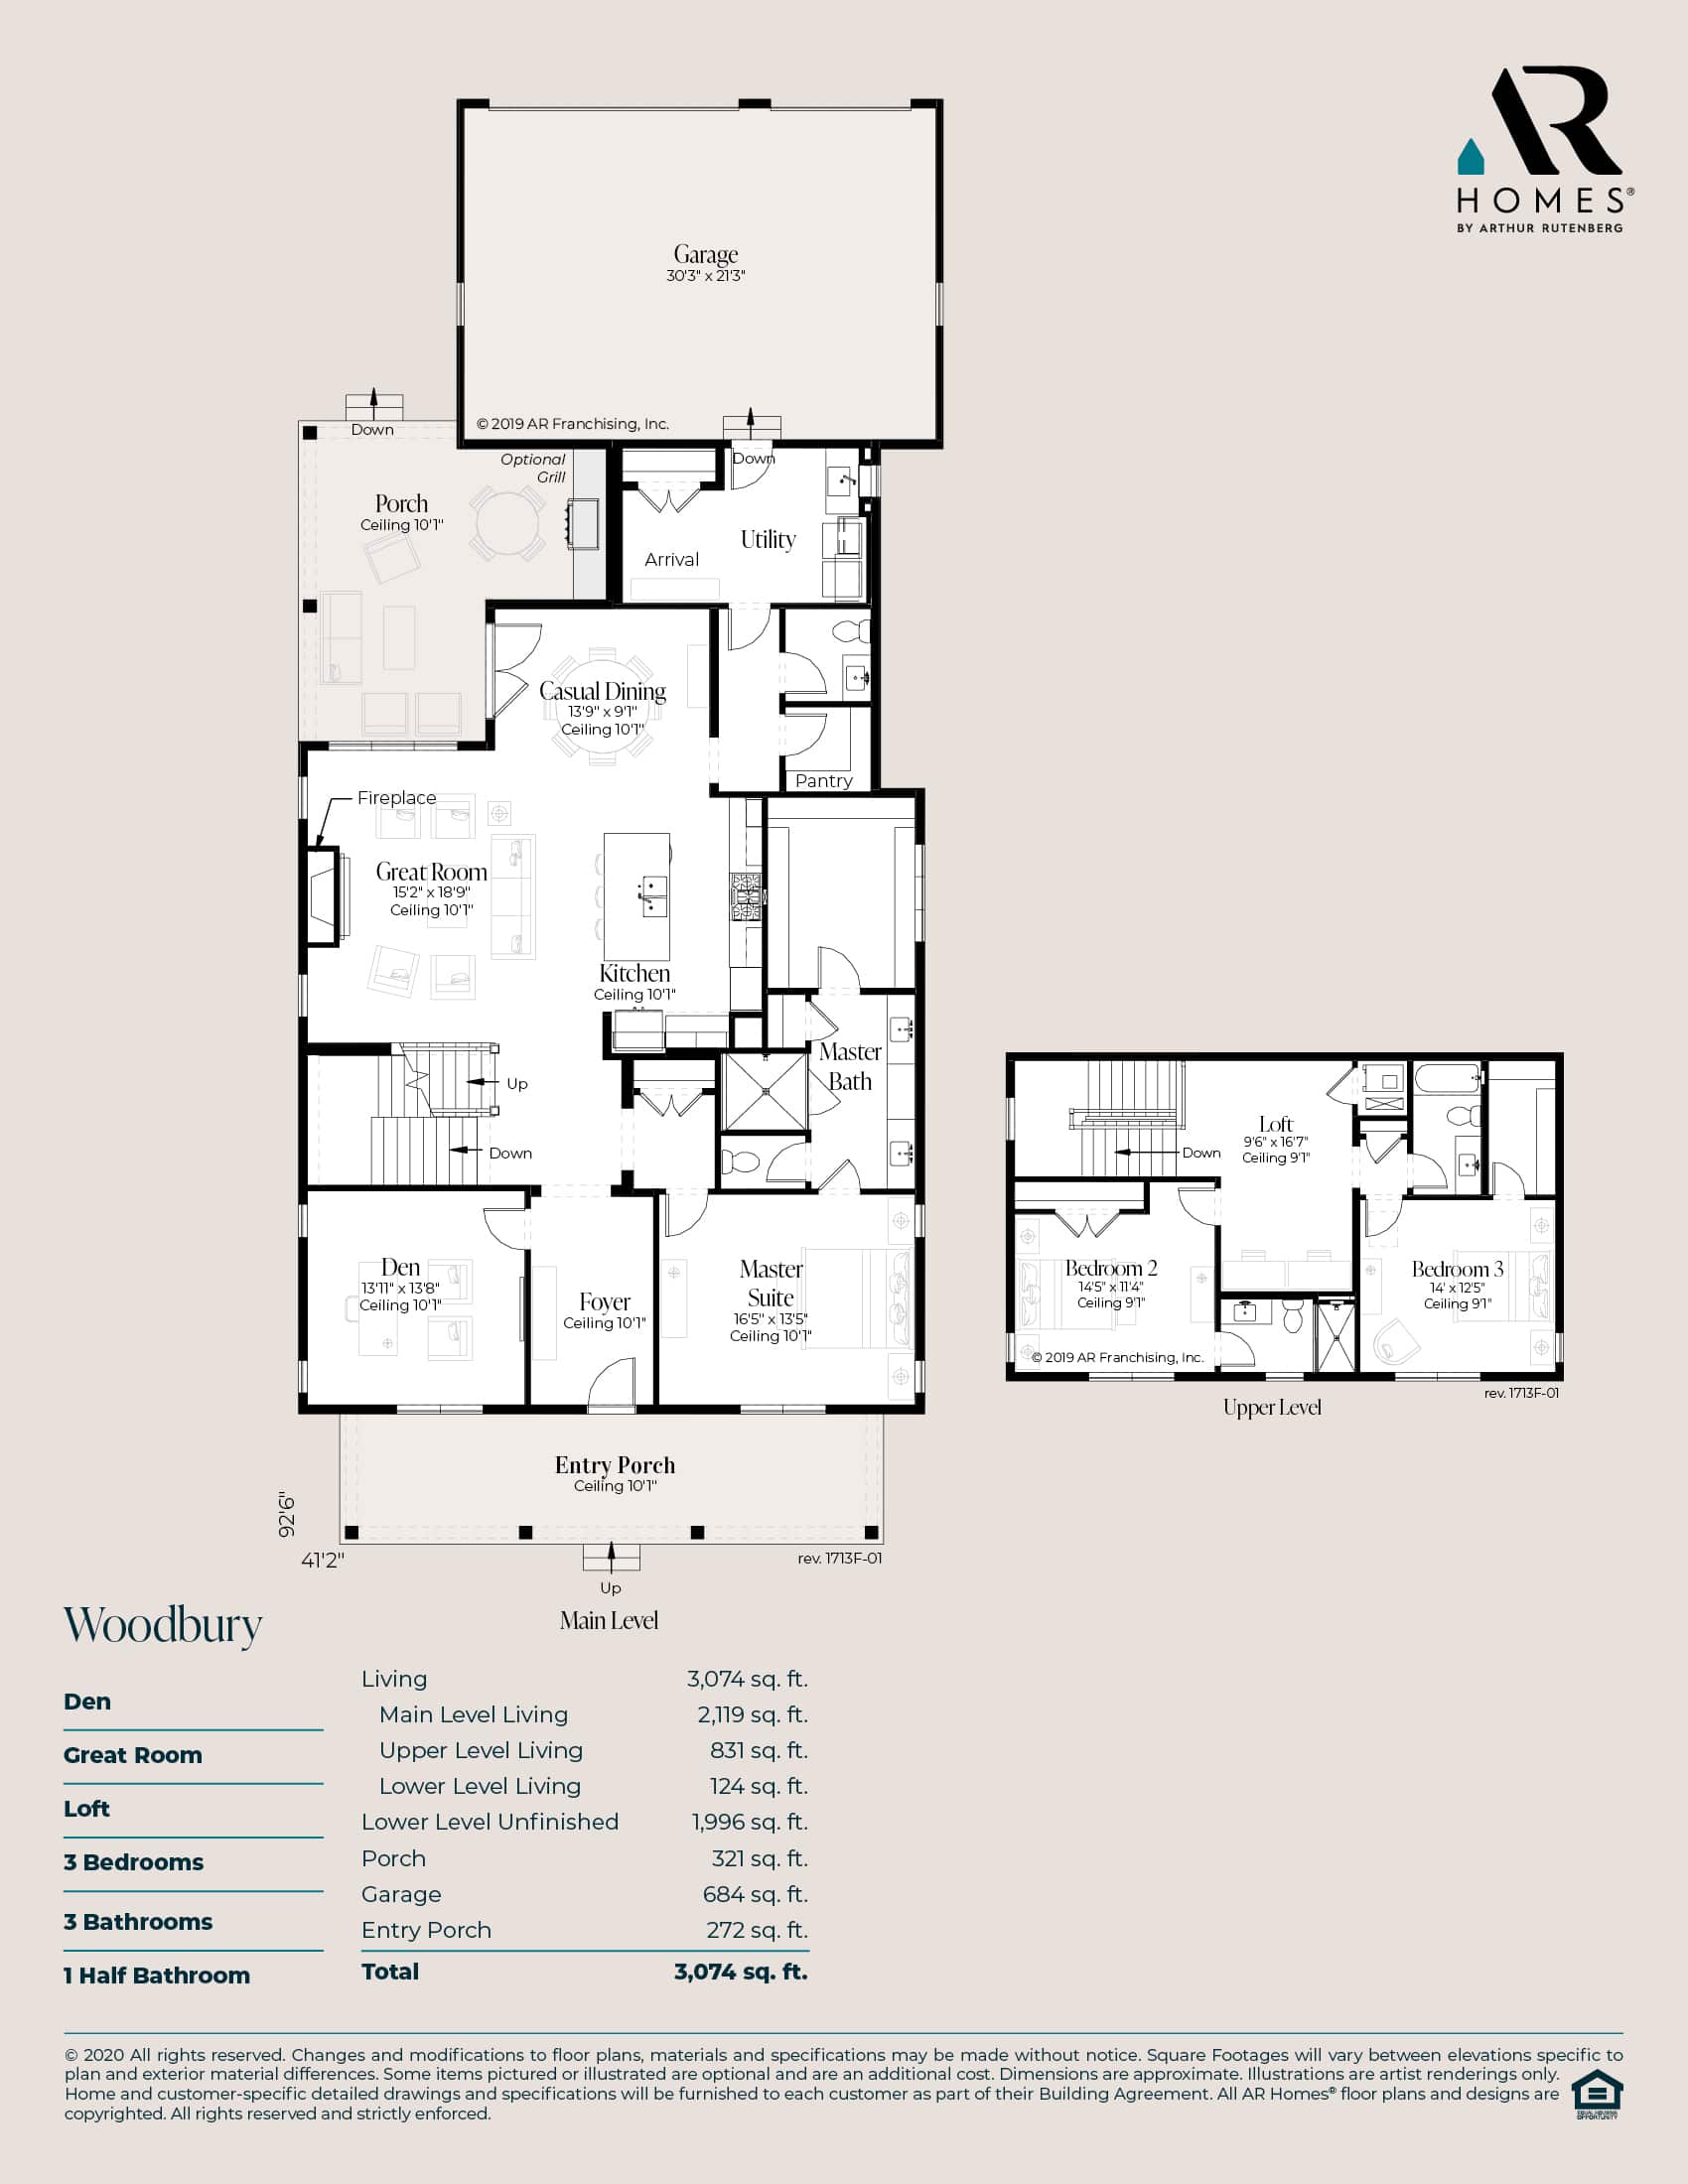 The Woodbury Plan Ar Homes By Arthur Rutenberg